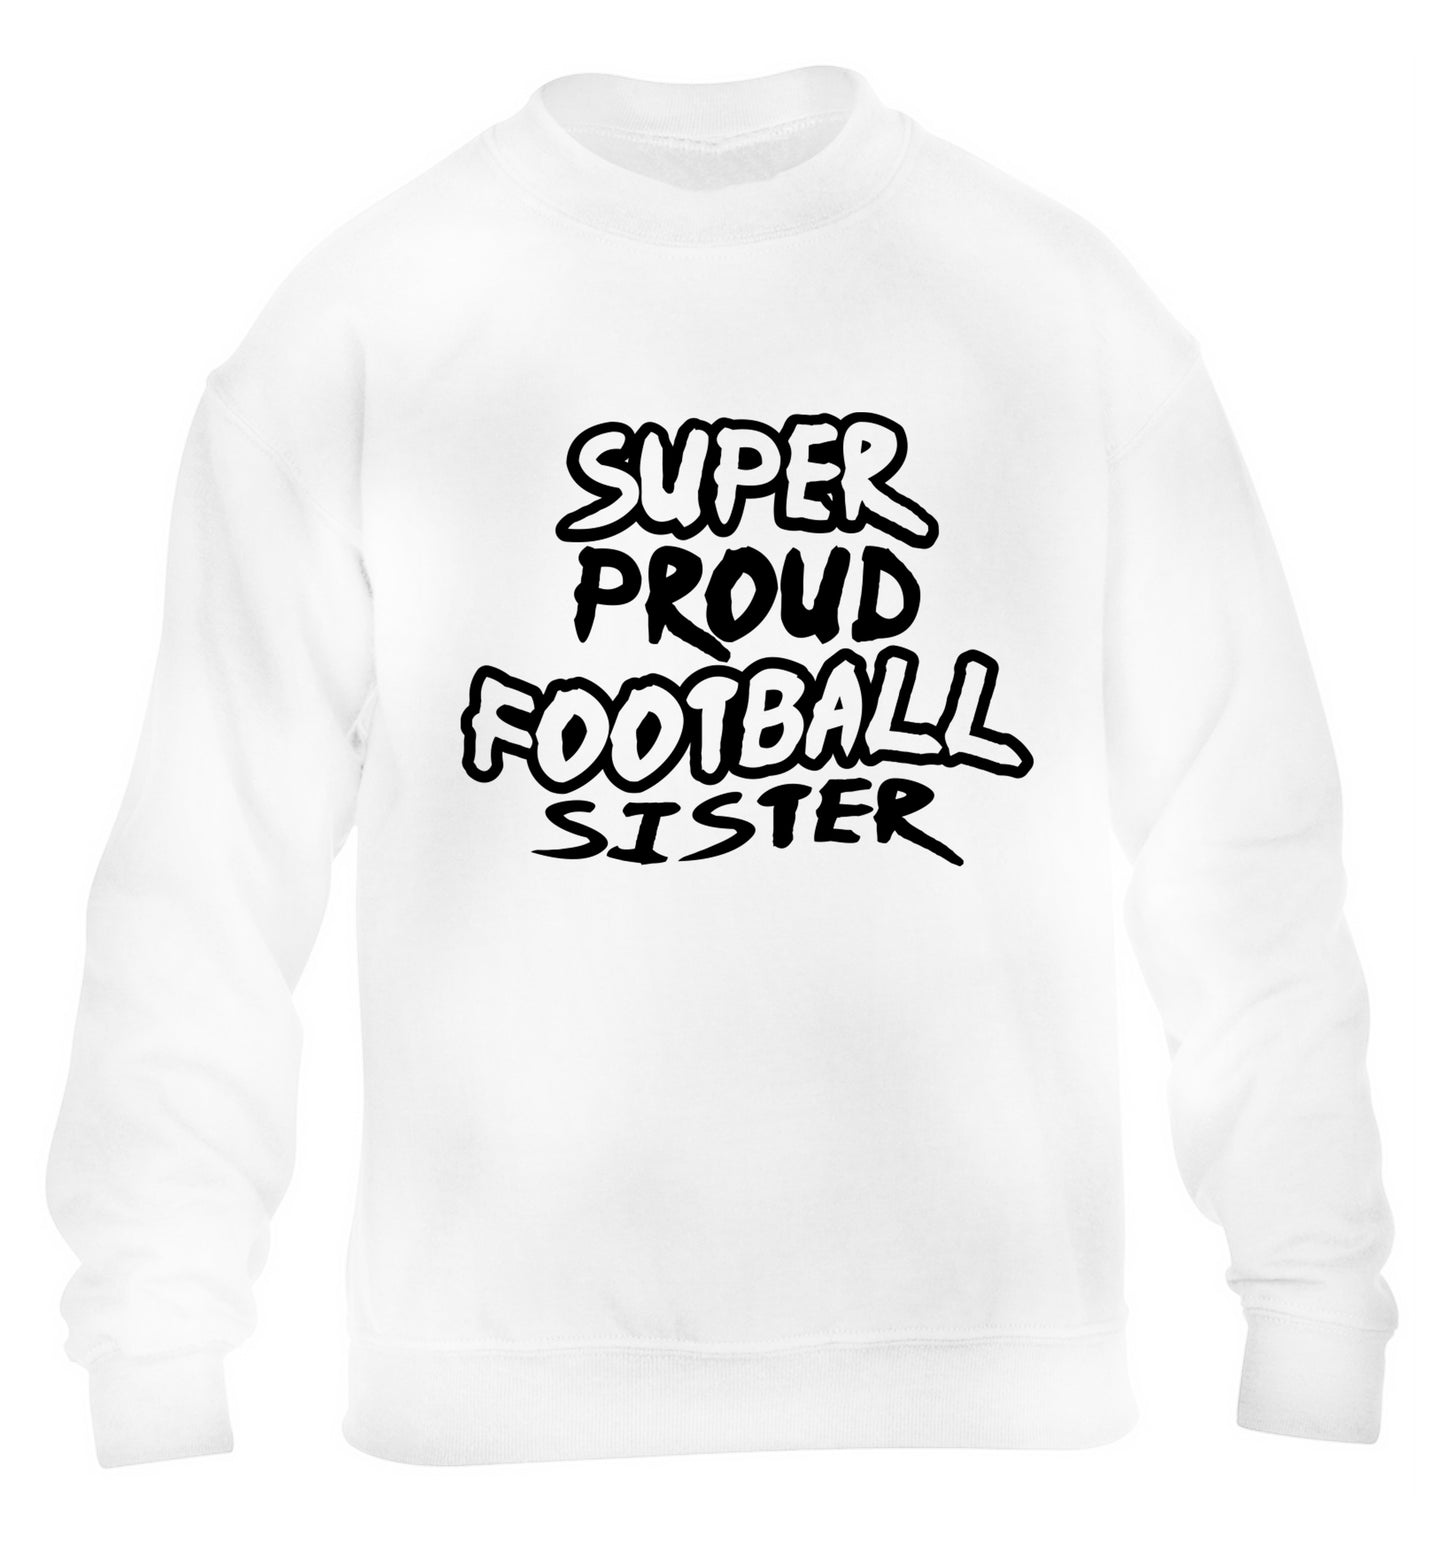 Super proud football sister children's white sweater 12-14 Years